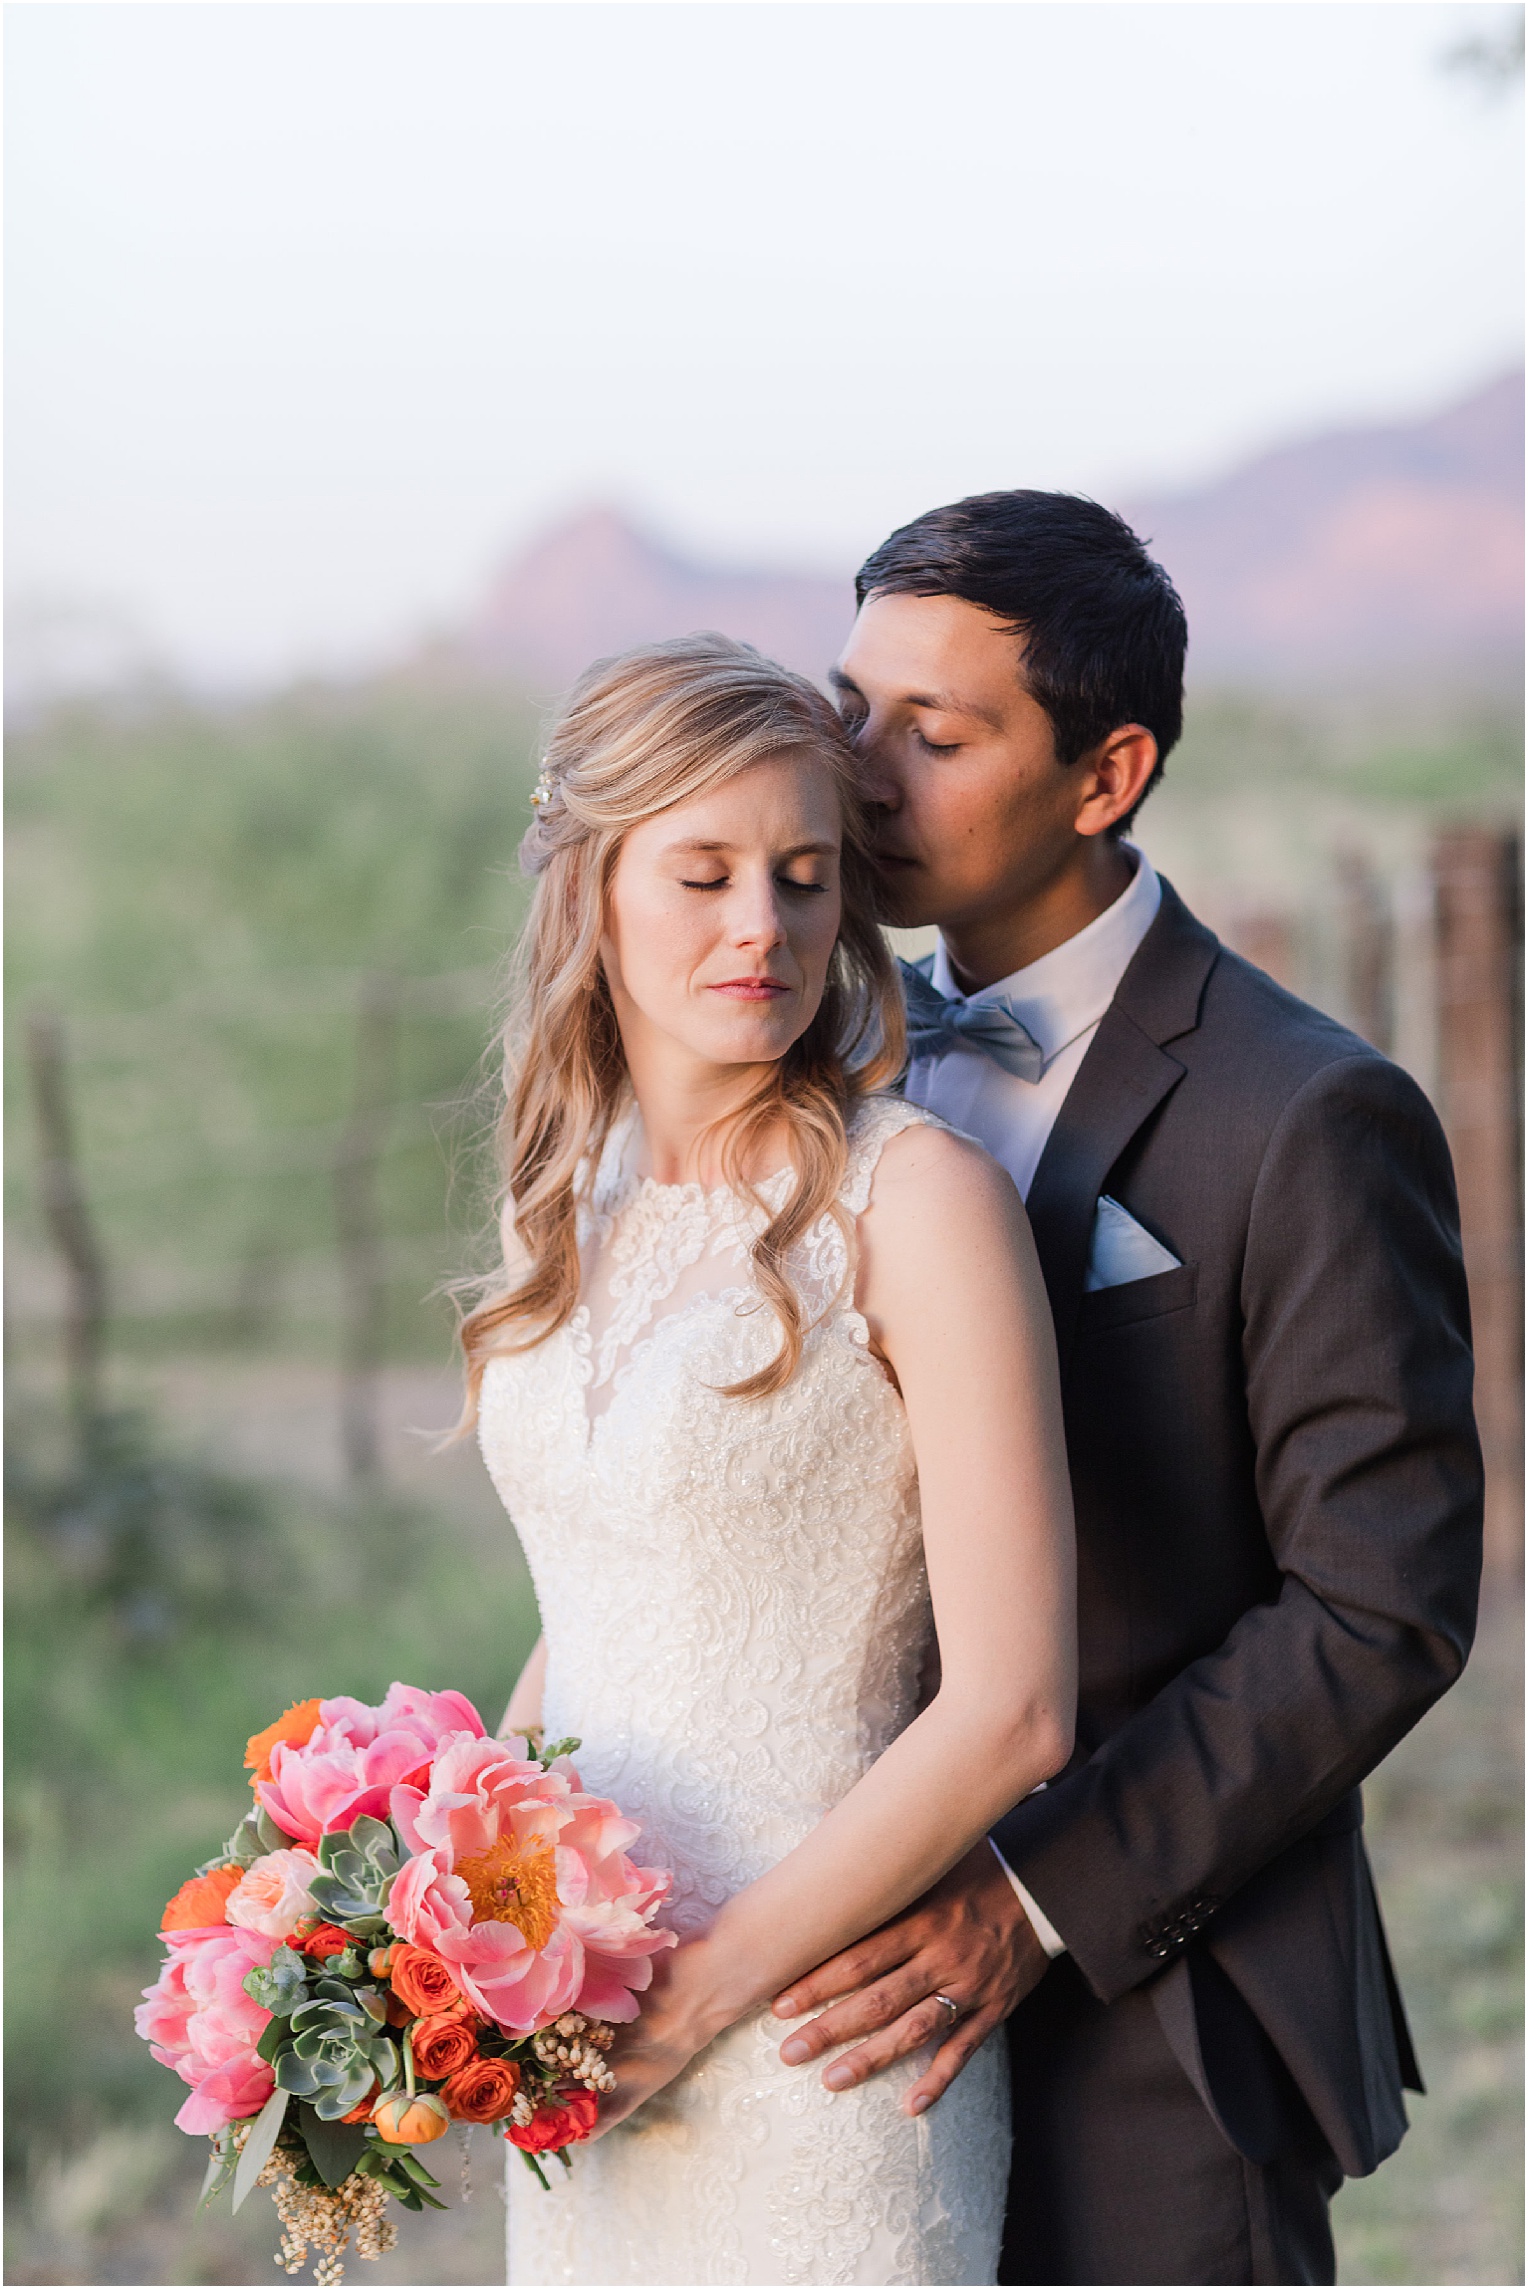 Agua Linda Farm Wedding Tucson AZ Megan & Jorge sunset bride and groom portraits